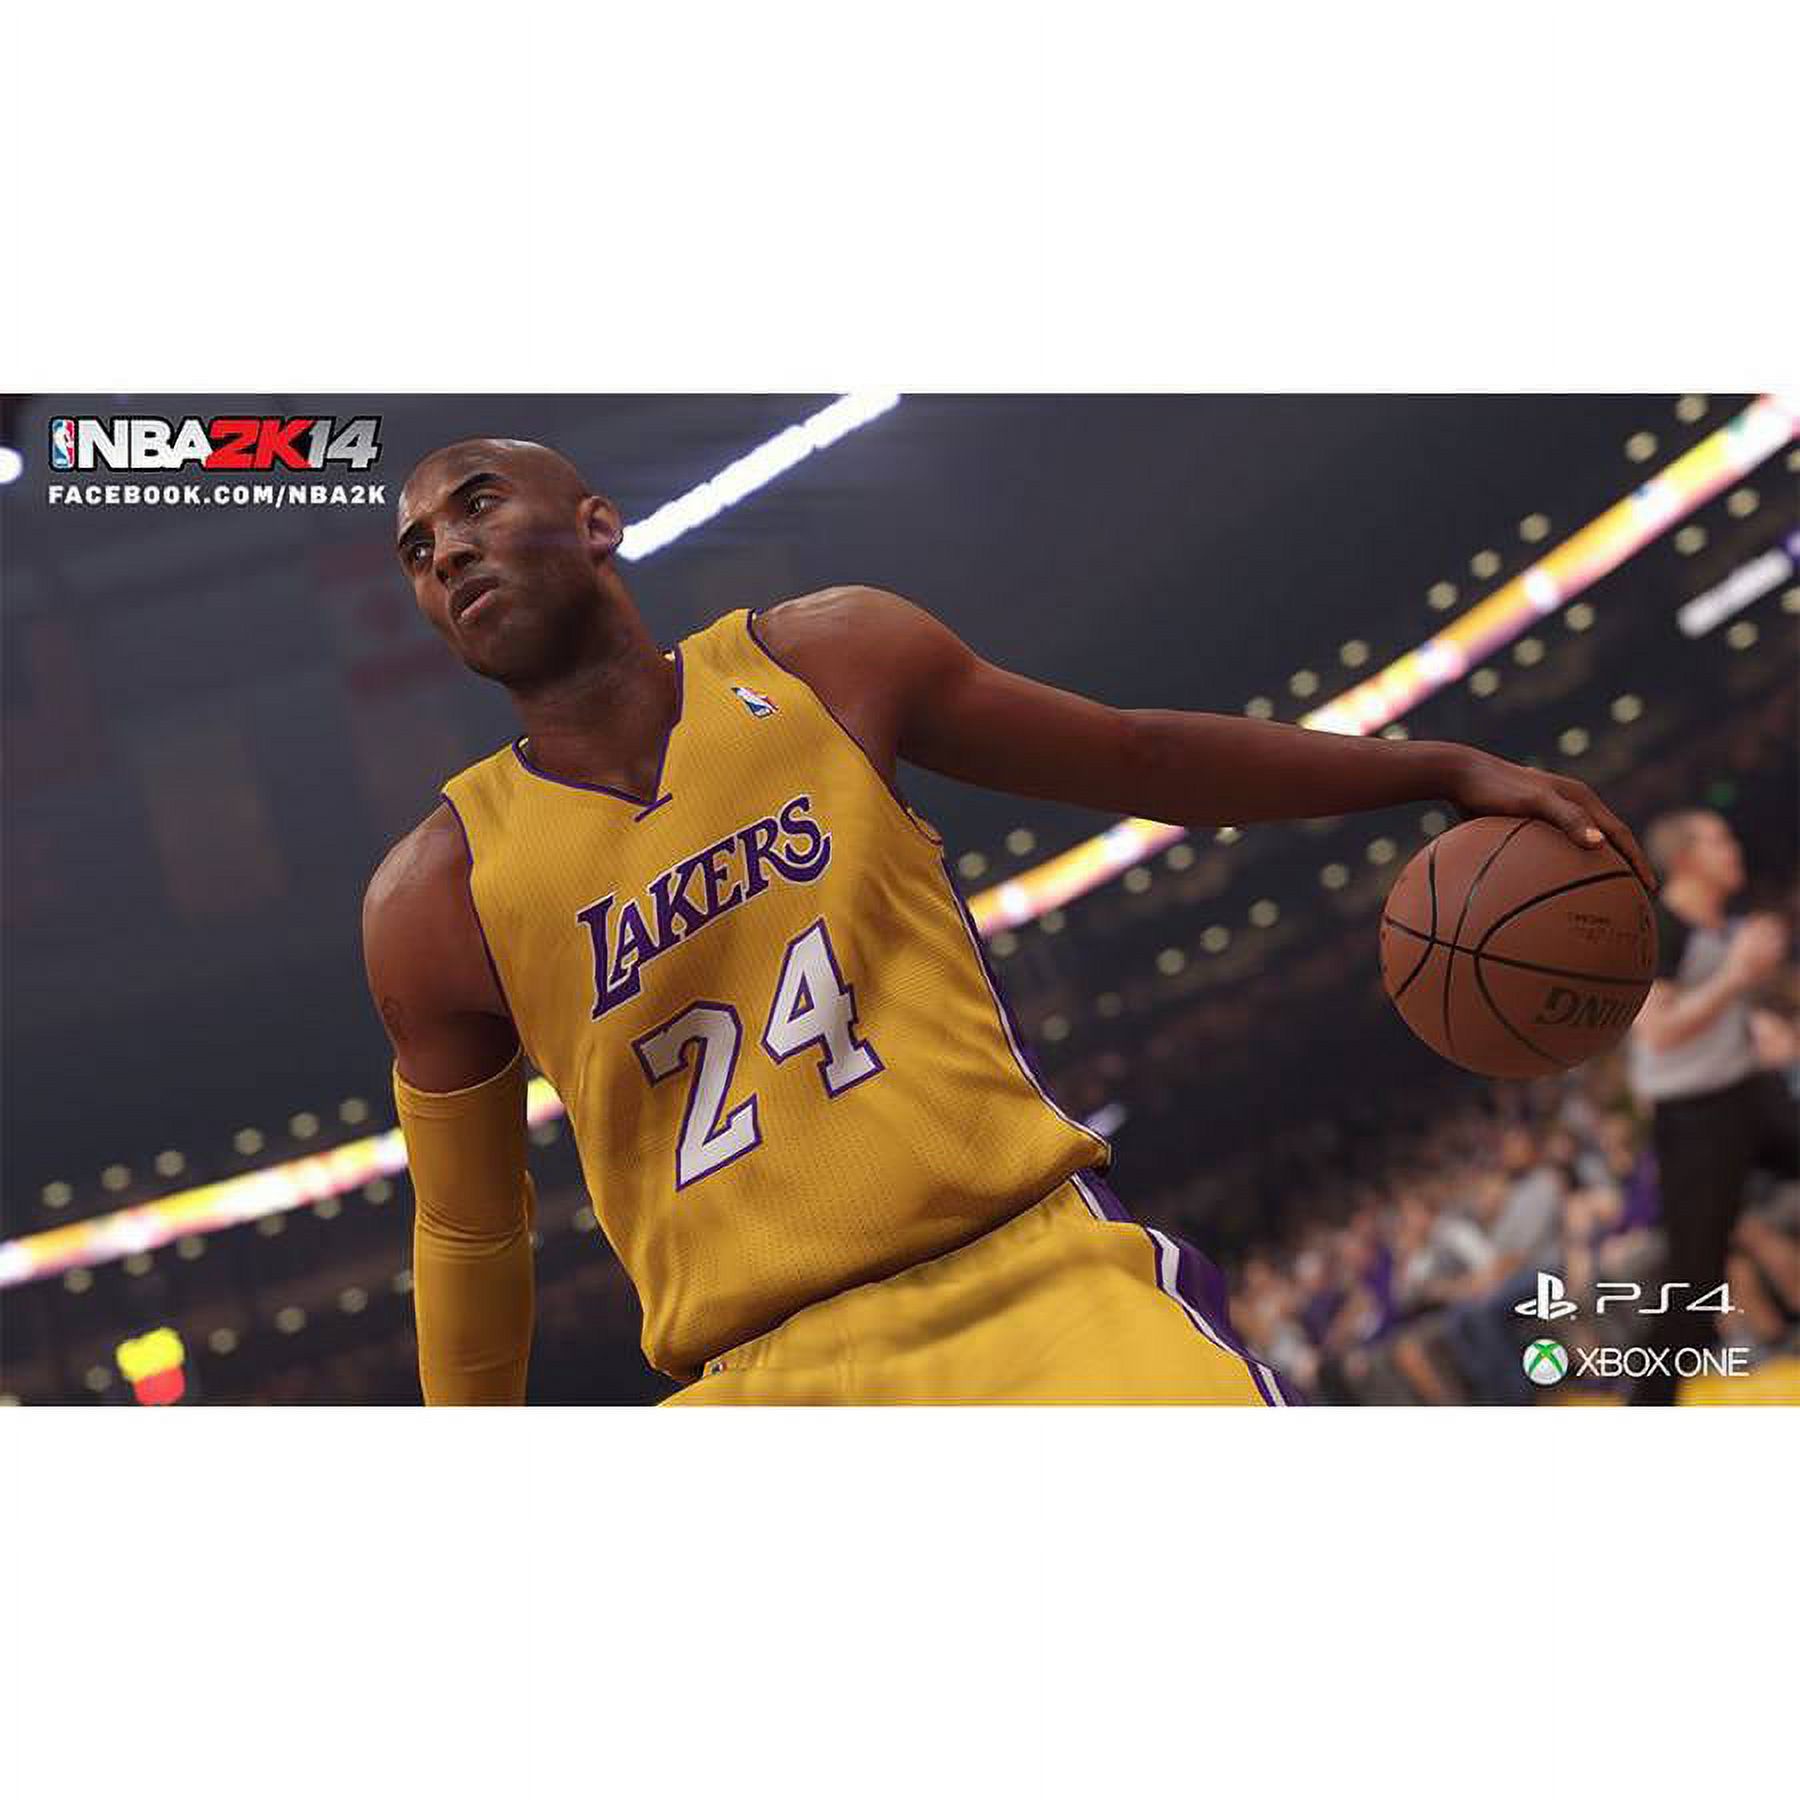 NBA 2K14, 2K, Xbox One, 710425493072 - image 3 of 6